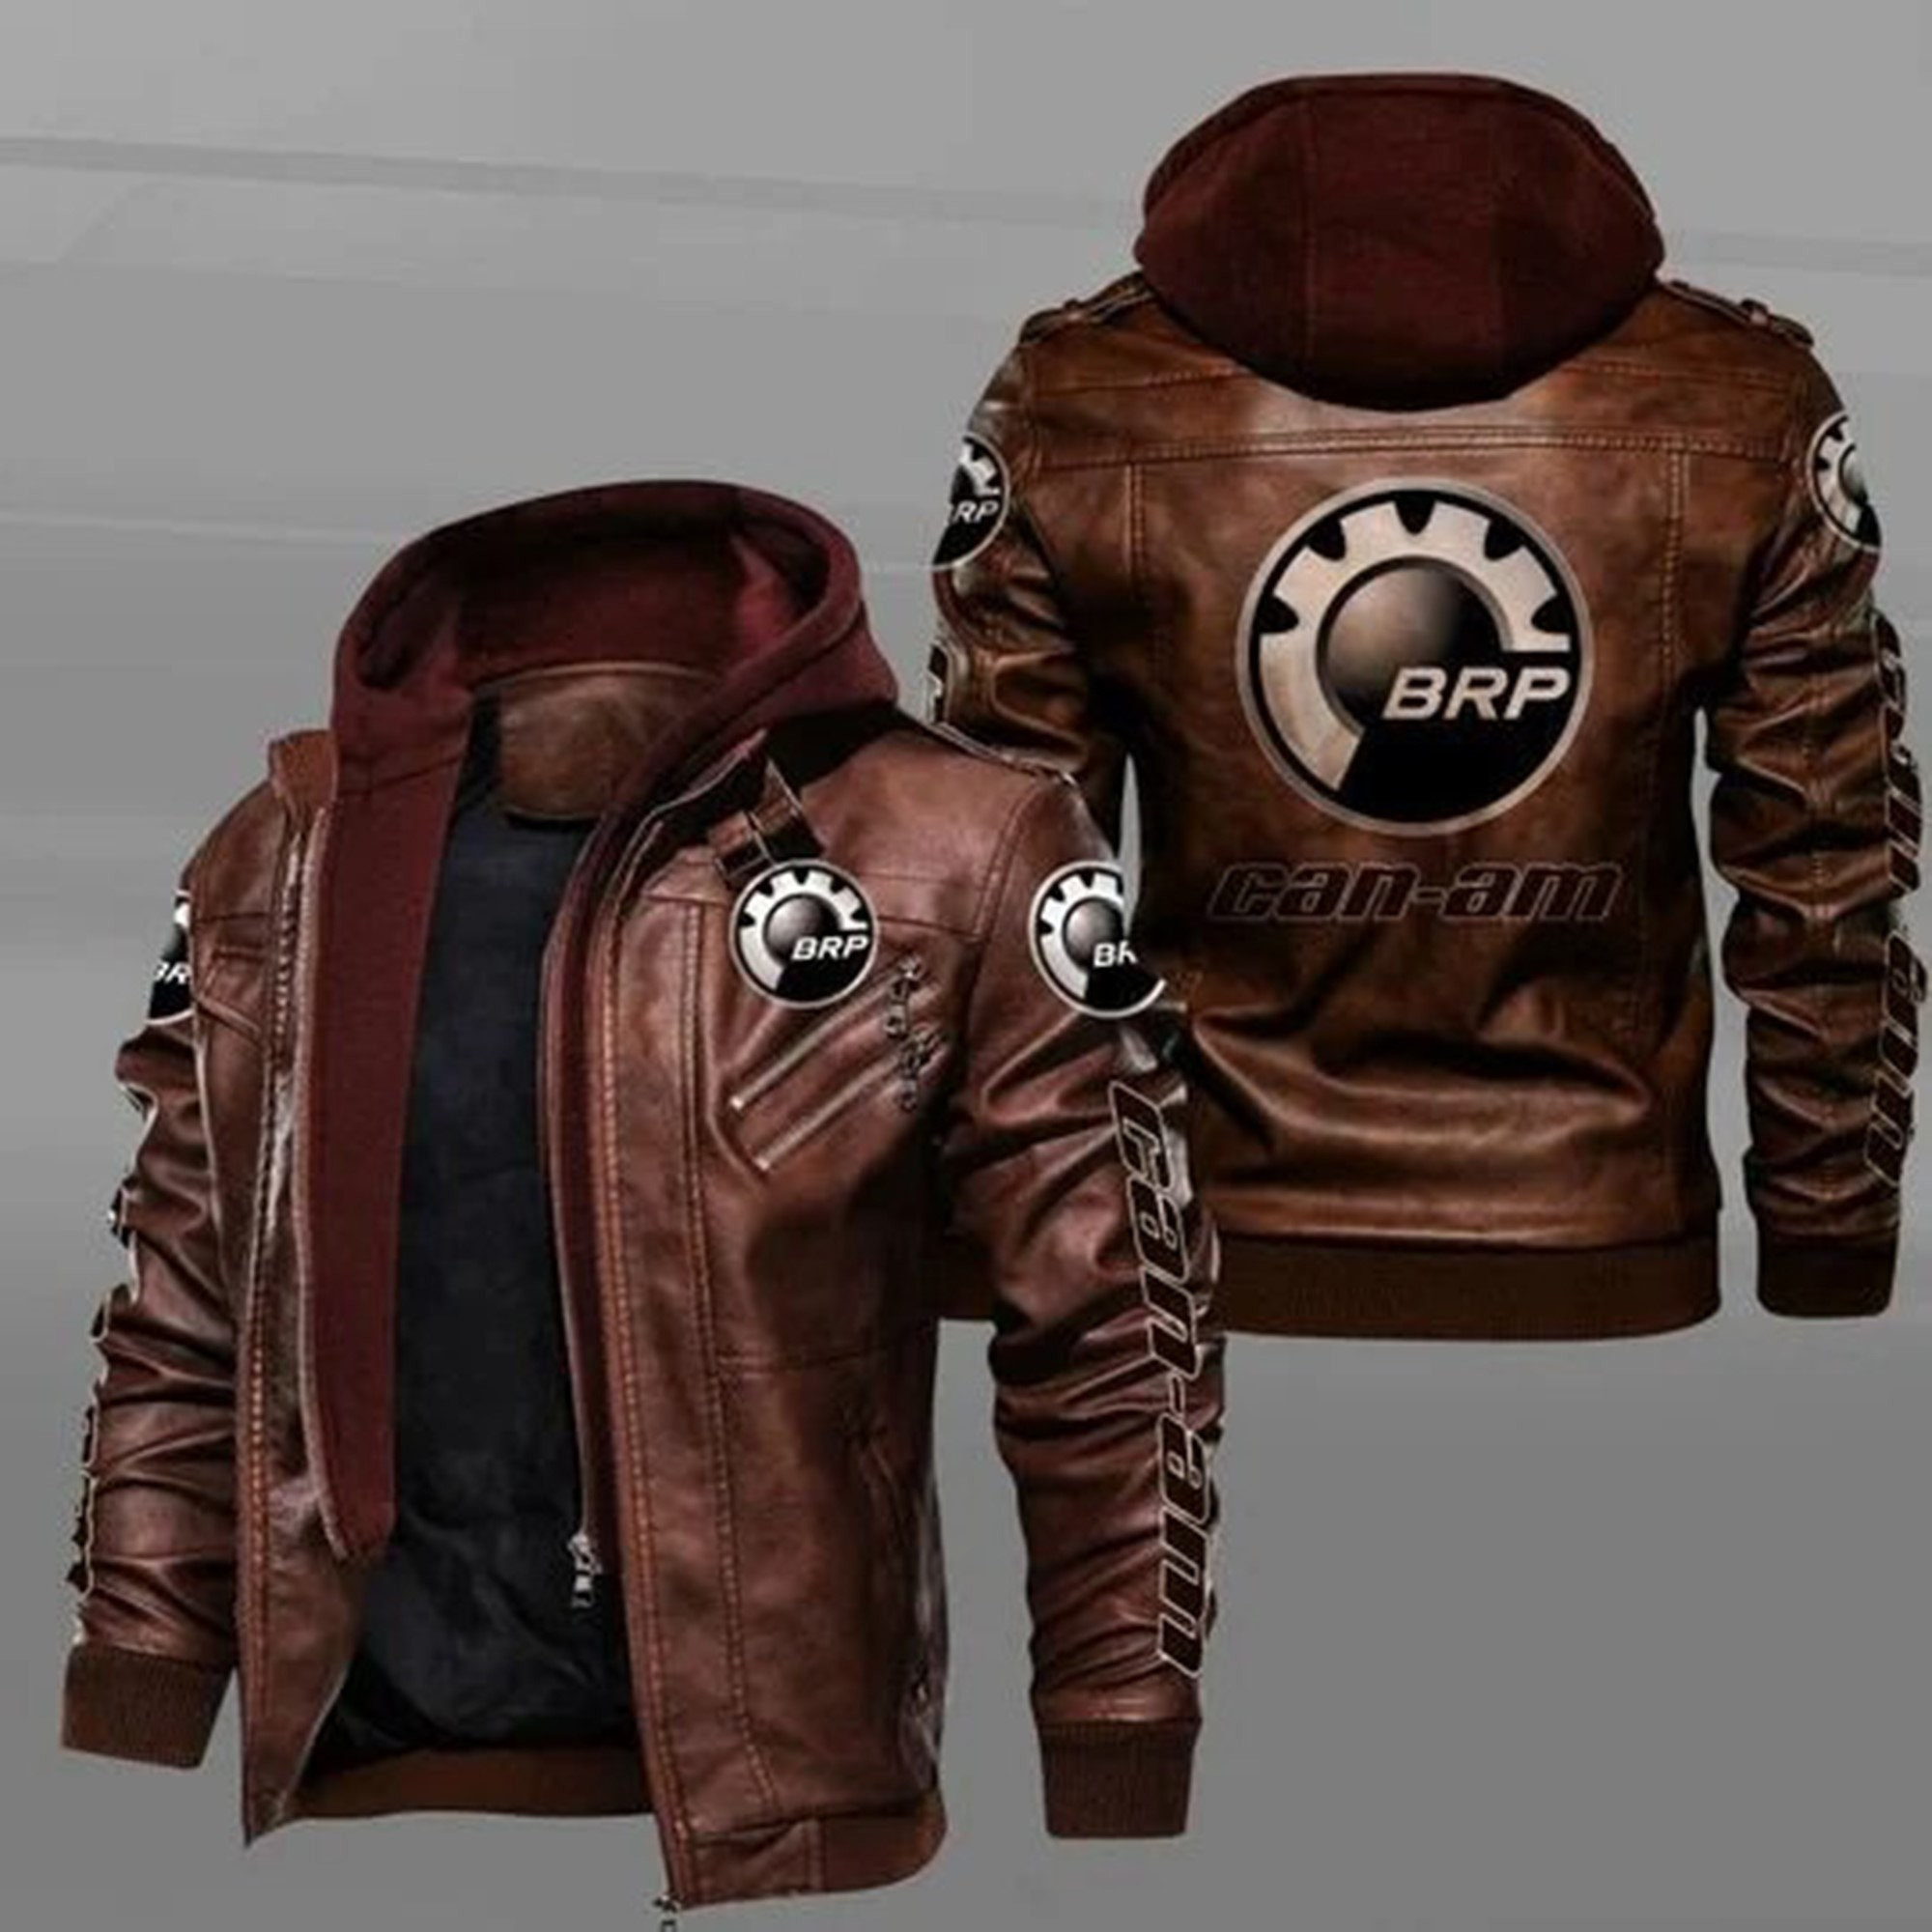 Choosing Leather Jacket that looks good on you below 215